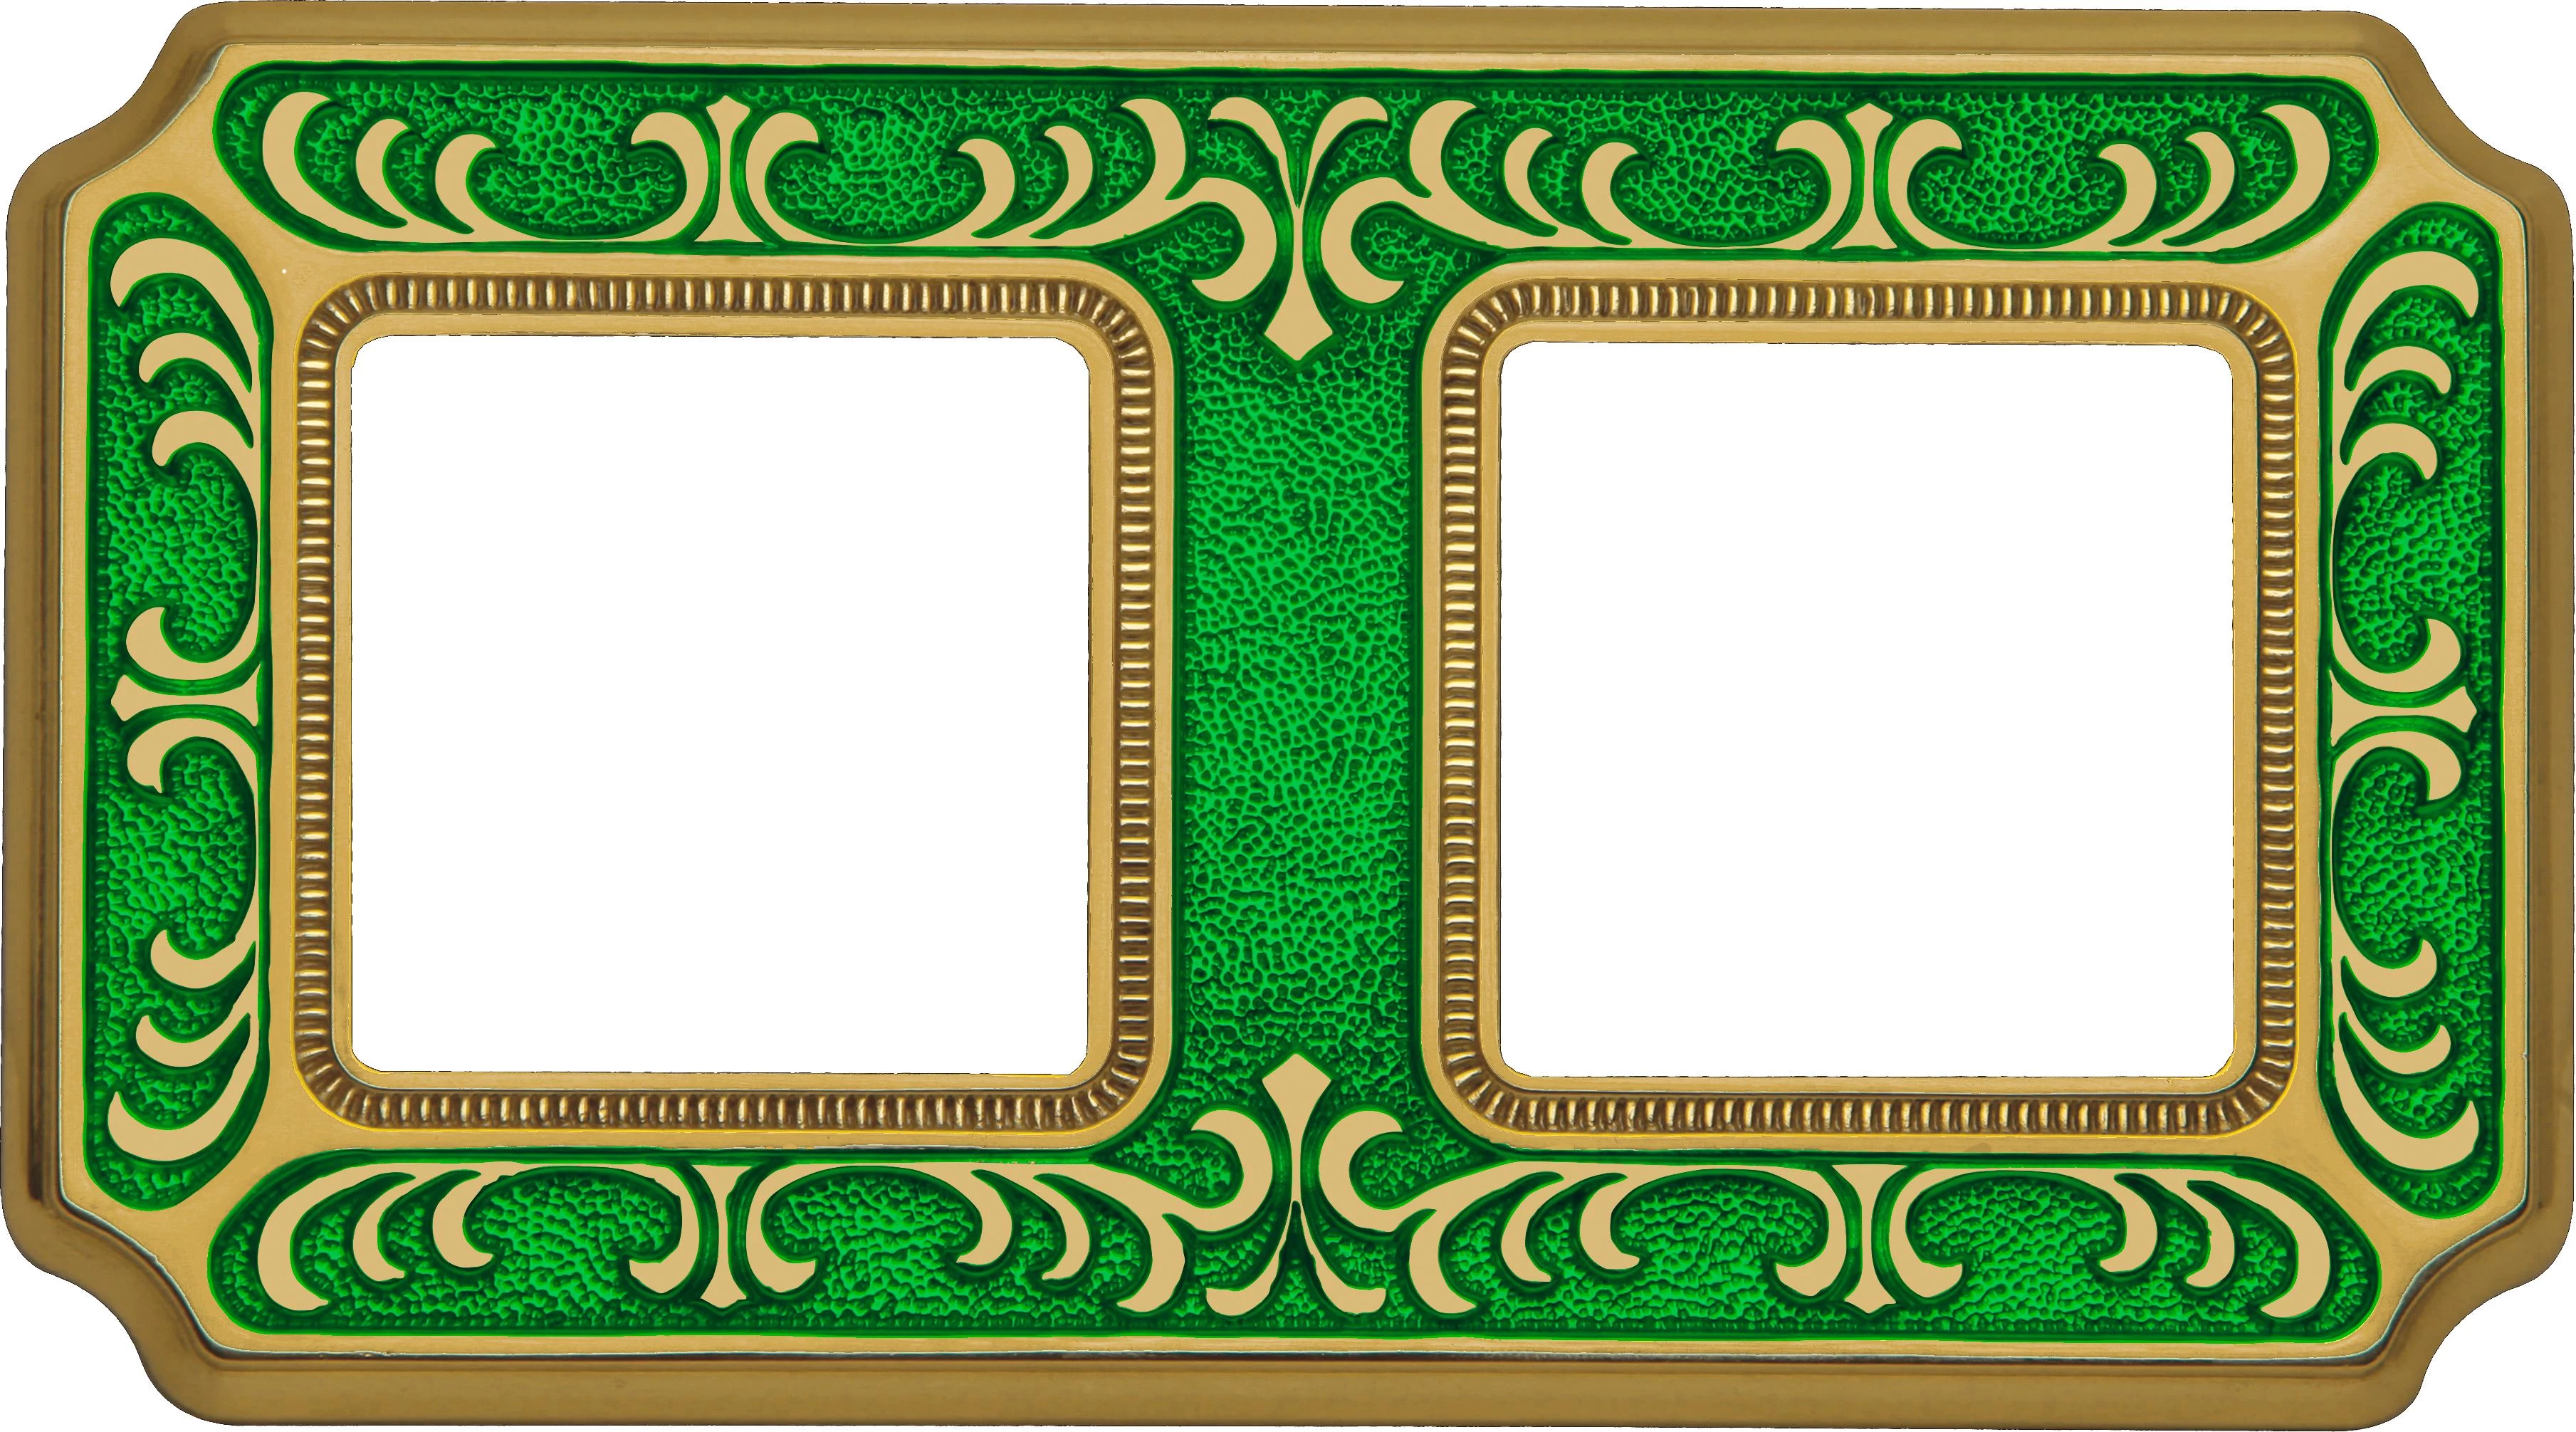  артикул FD01352VEEN название Рамка двойная, цвет Изумрудно-зеленый, Siena, Fede